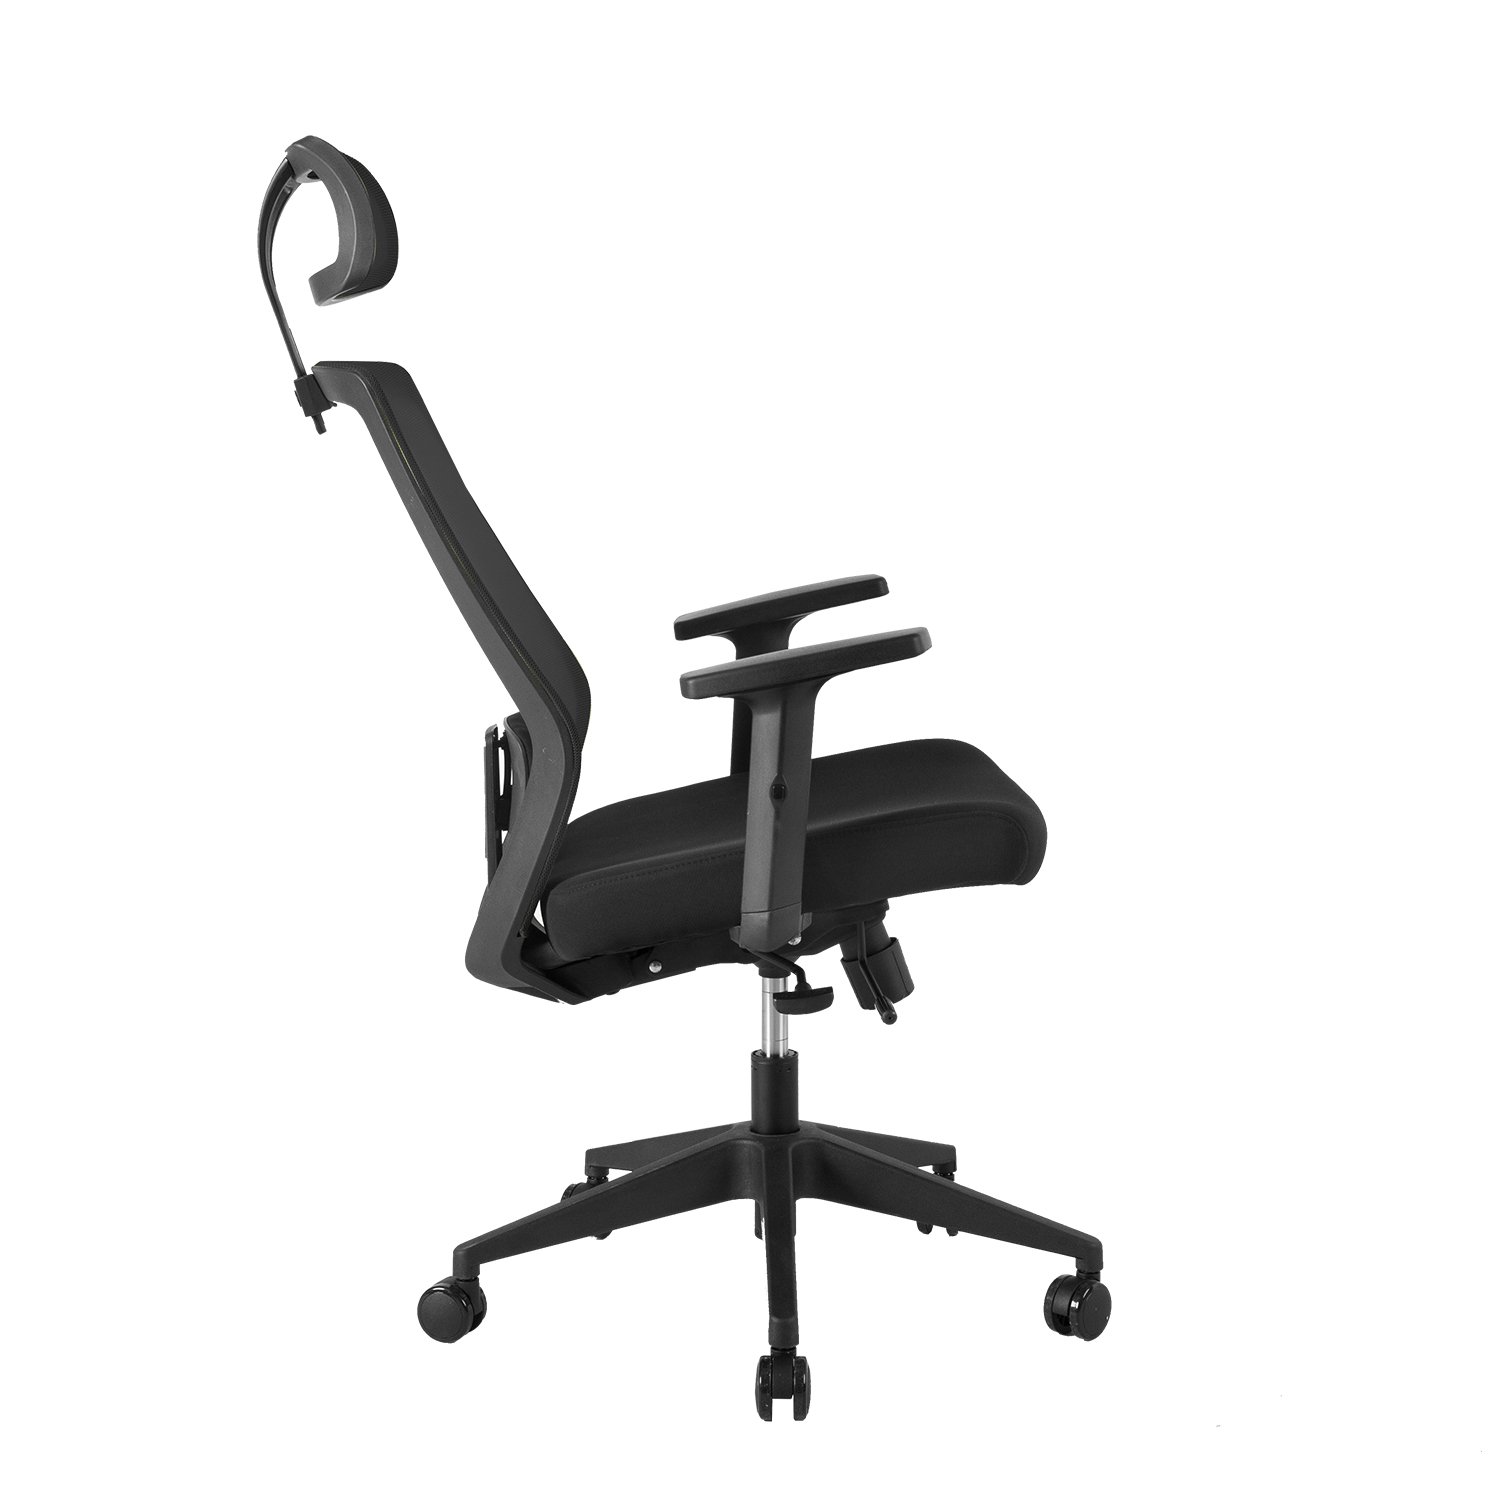 Biuro kėdė JOY, 64x64x115-125cm, juoda - 3